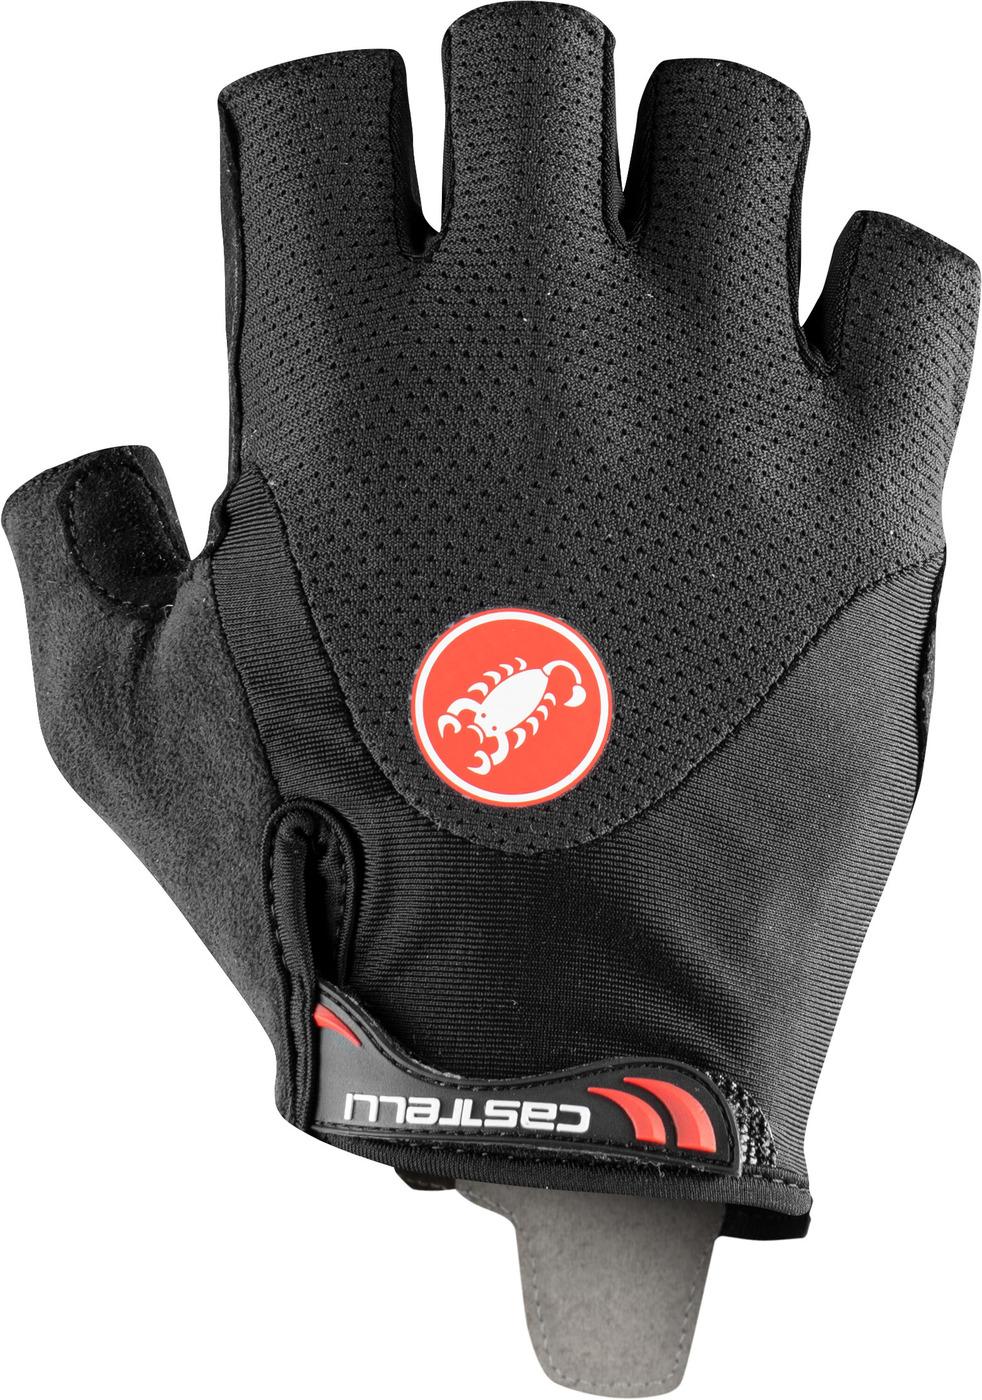 Castelli Arenberg Gel 2 Cycling Gloves - Black